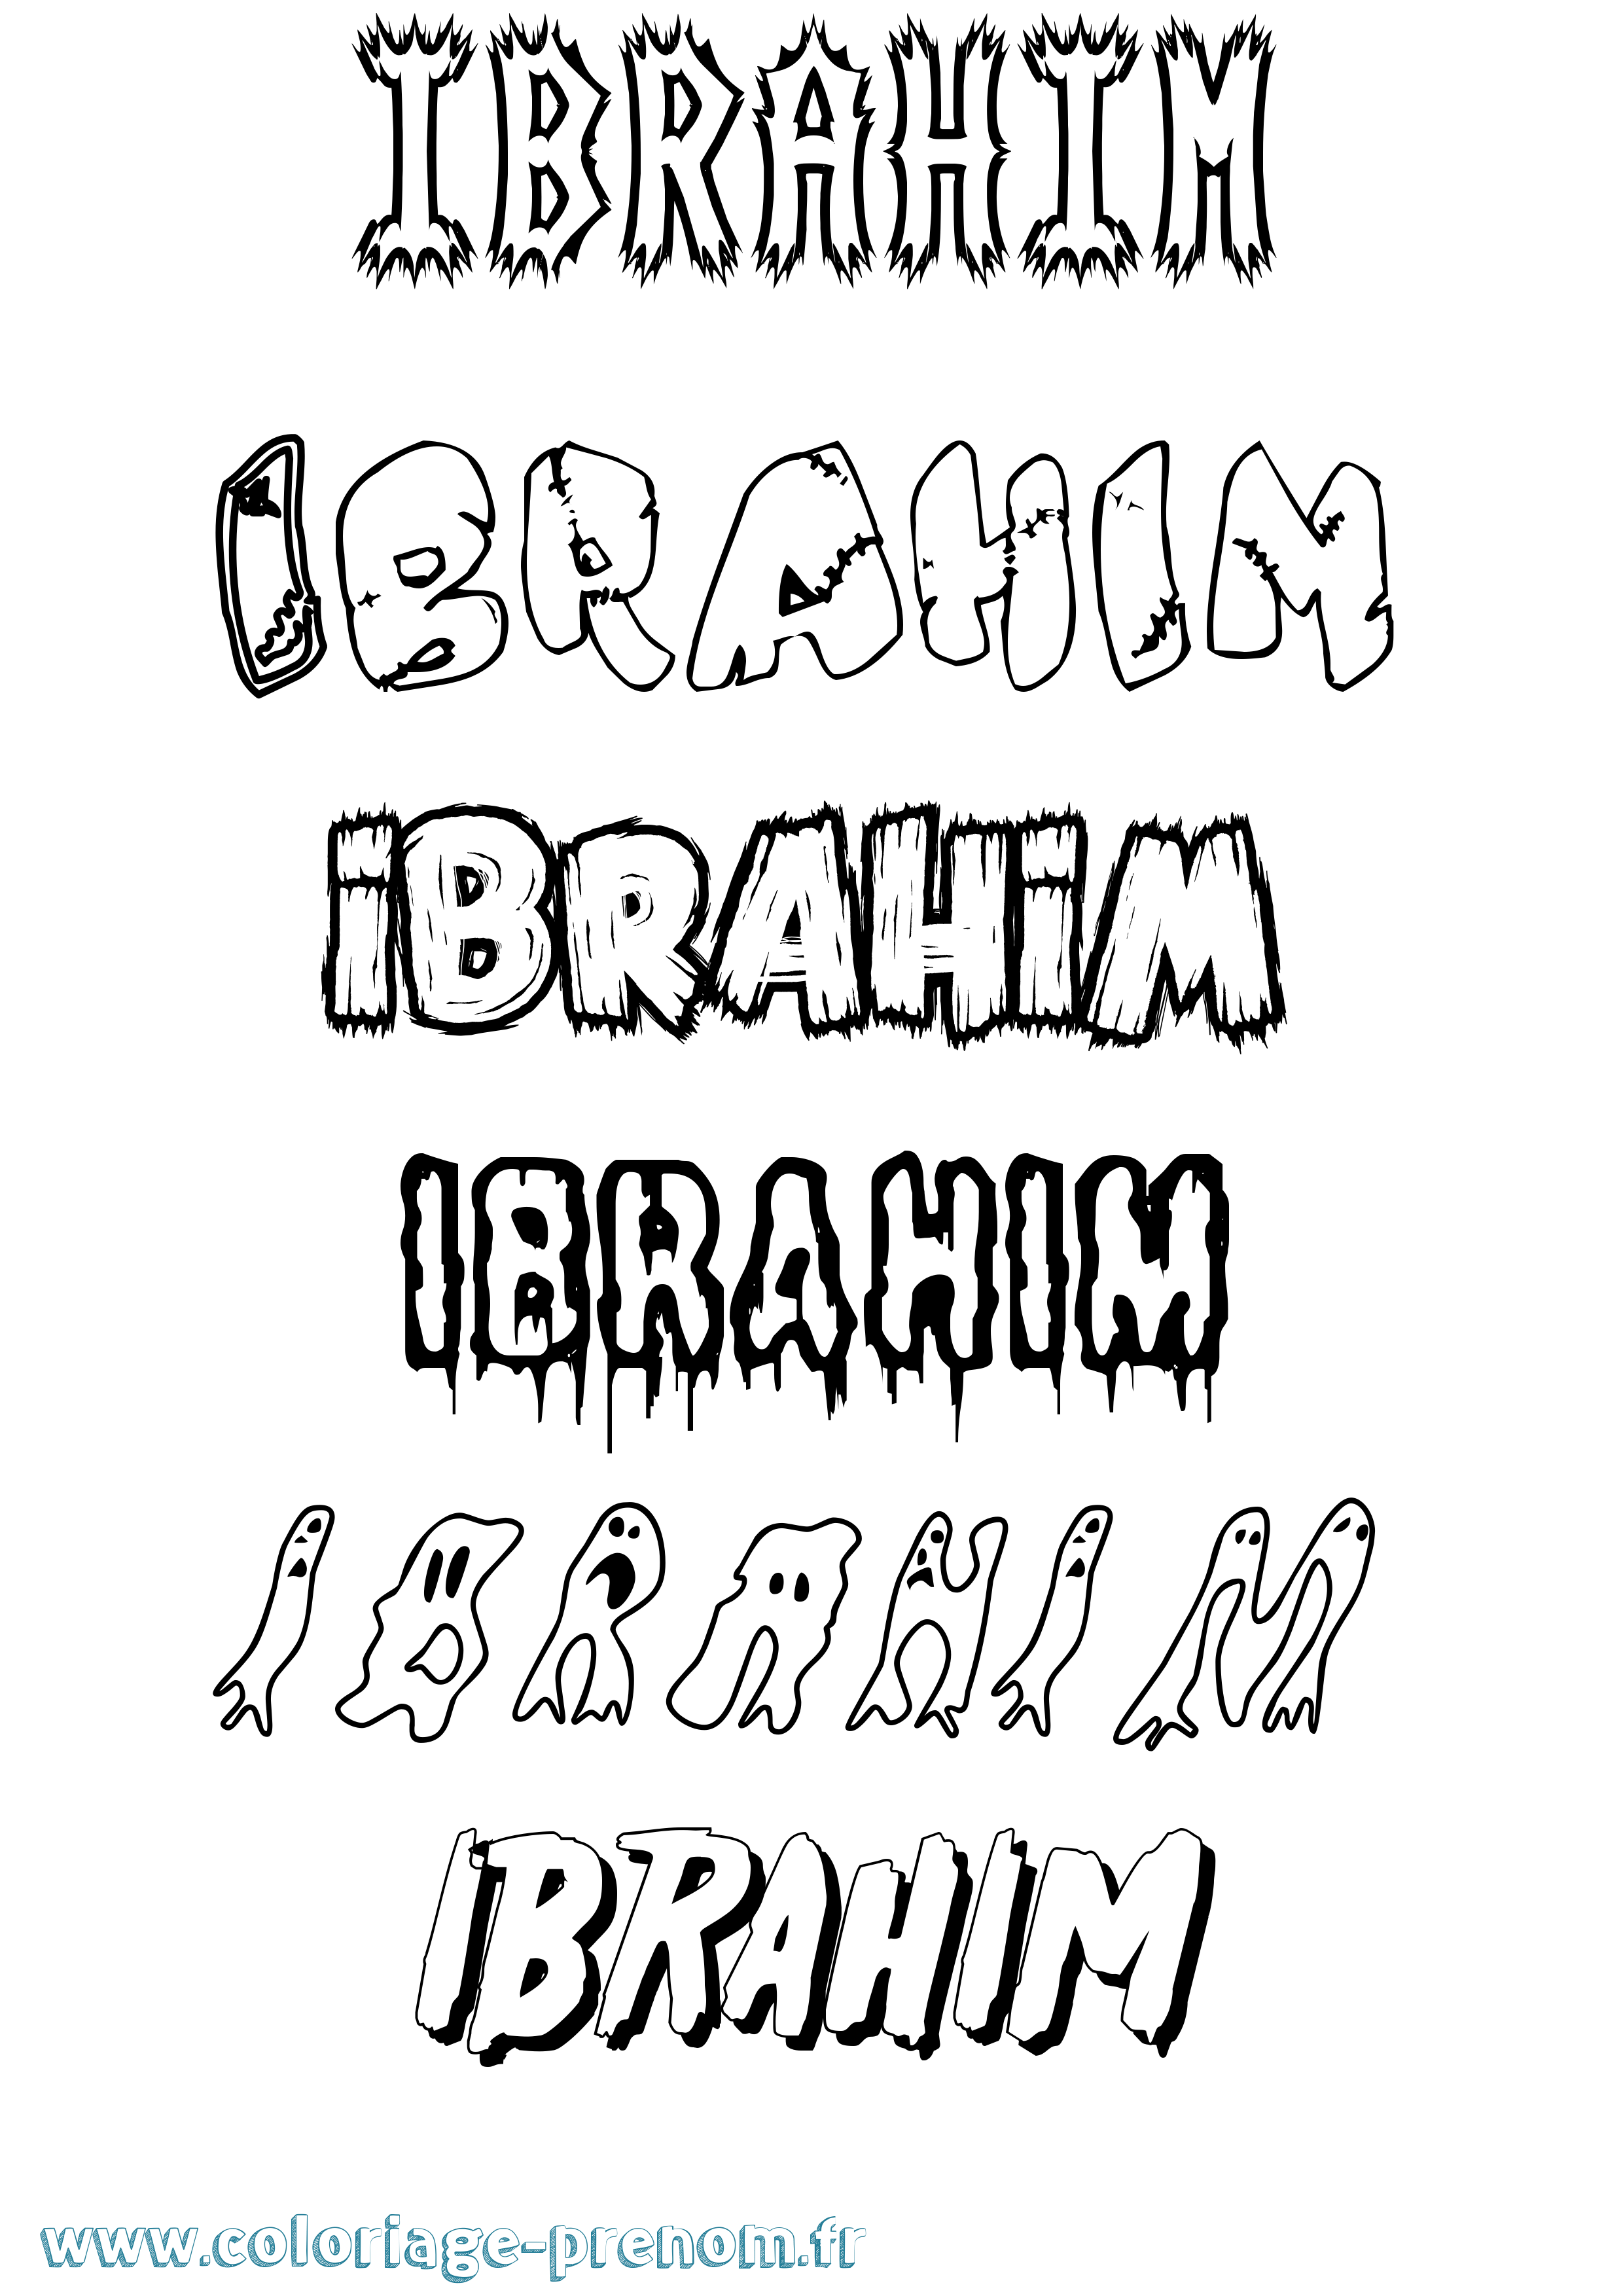 Coloriage prénom Ibrahim